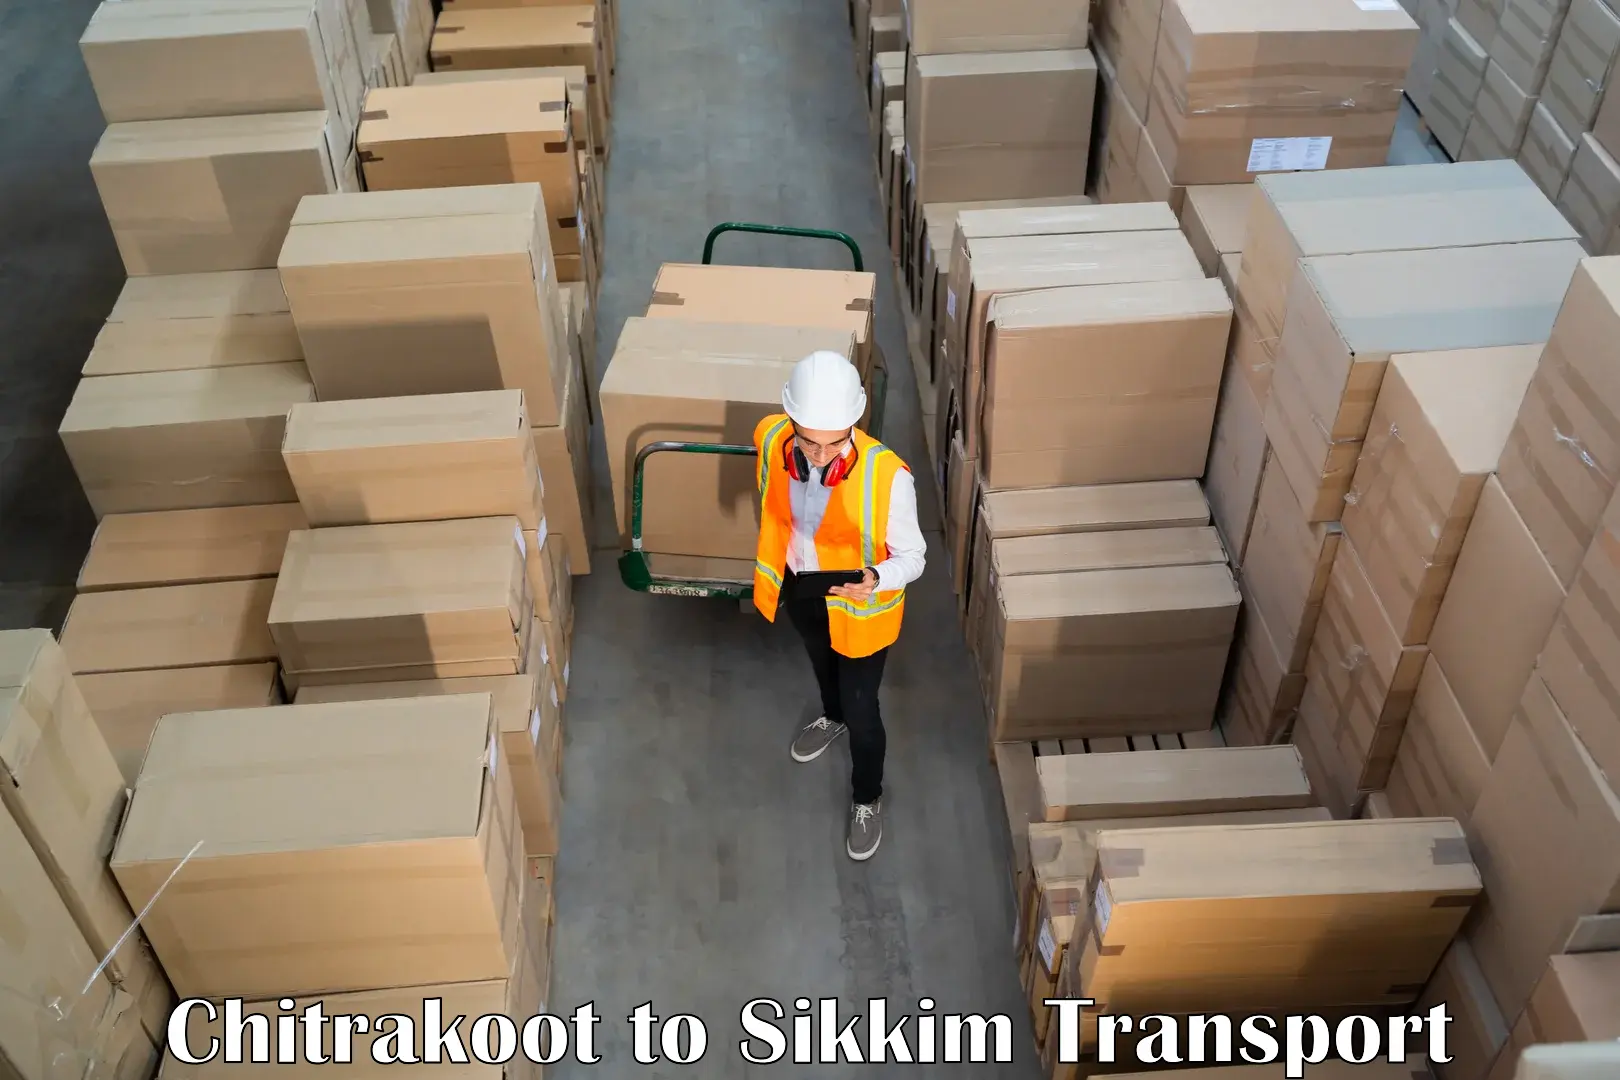 Sending bike to another city Chitrakoot to Sikkim